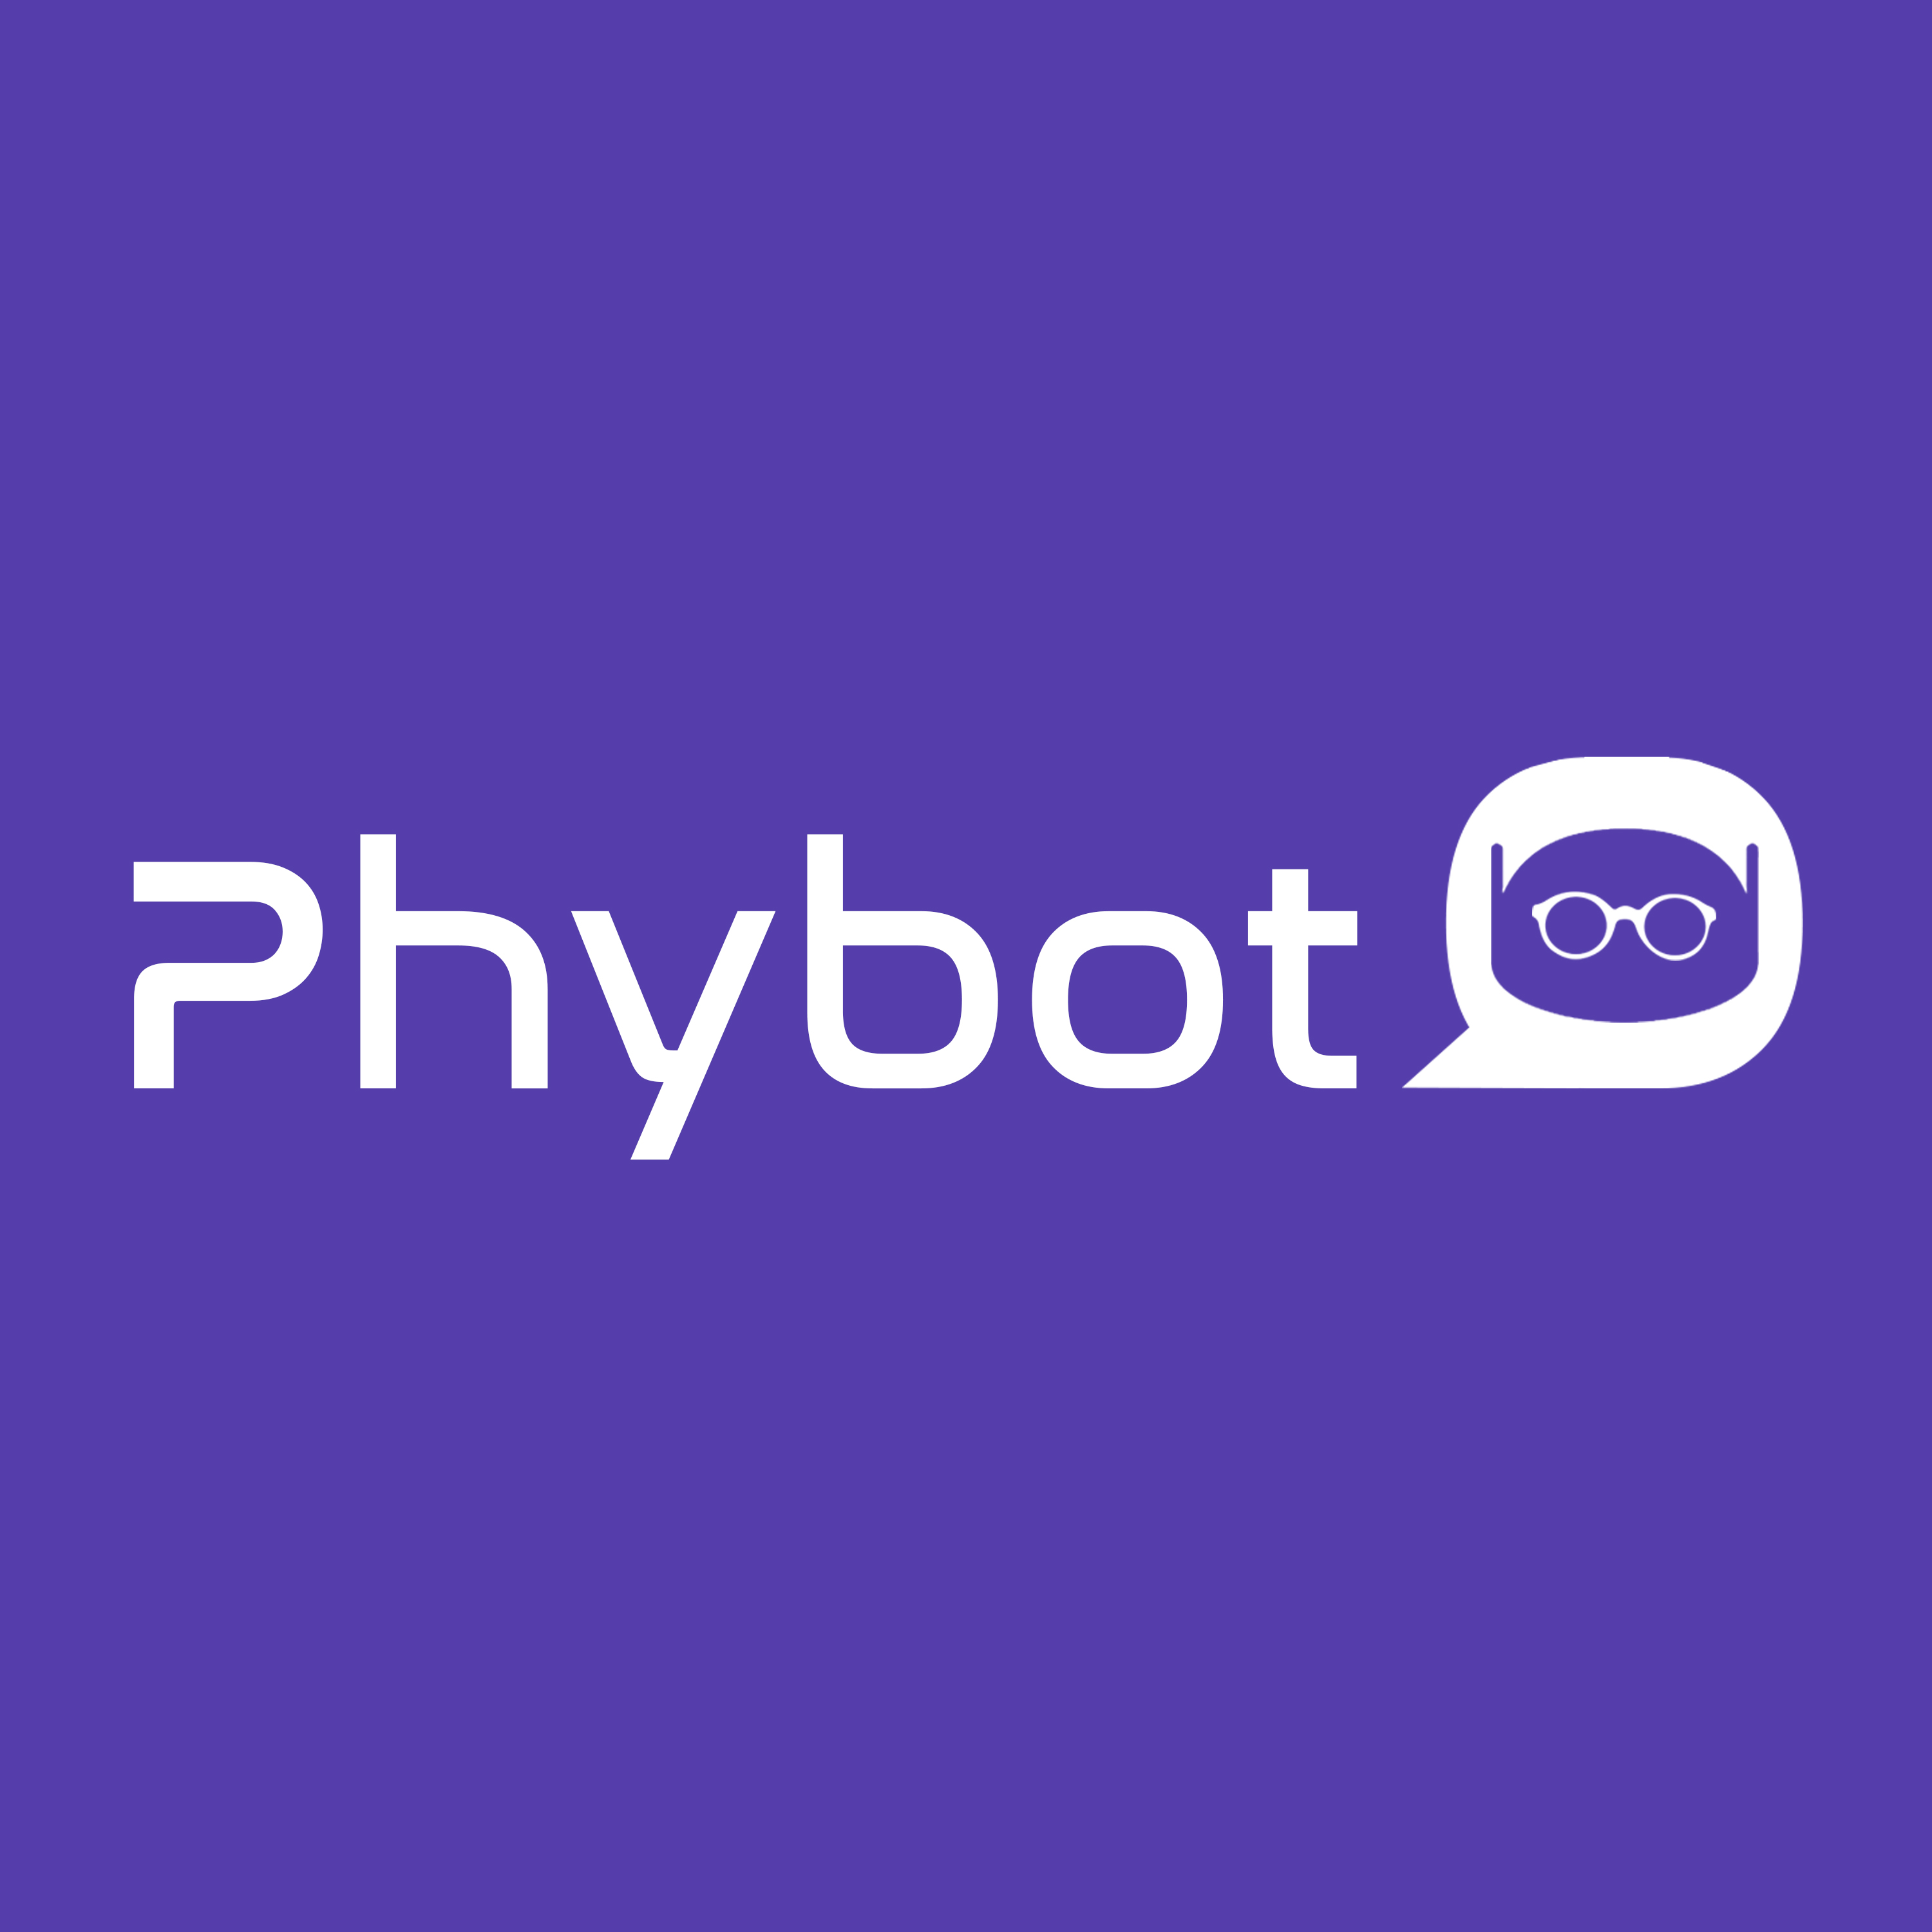 Phybot Branding & Print